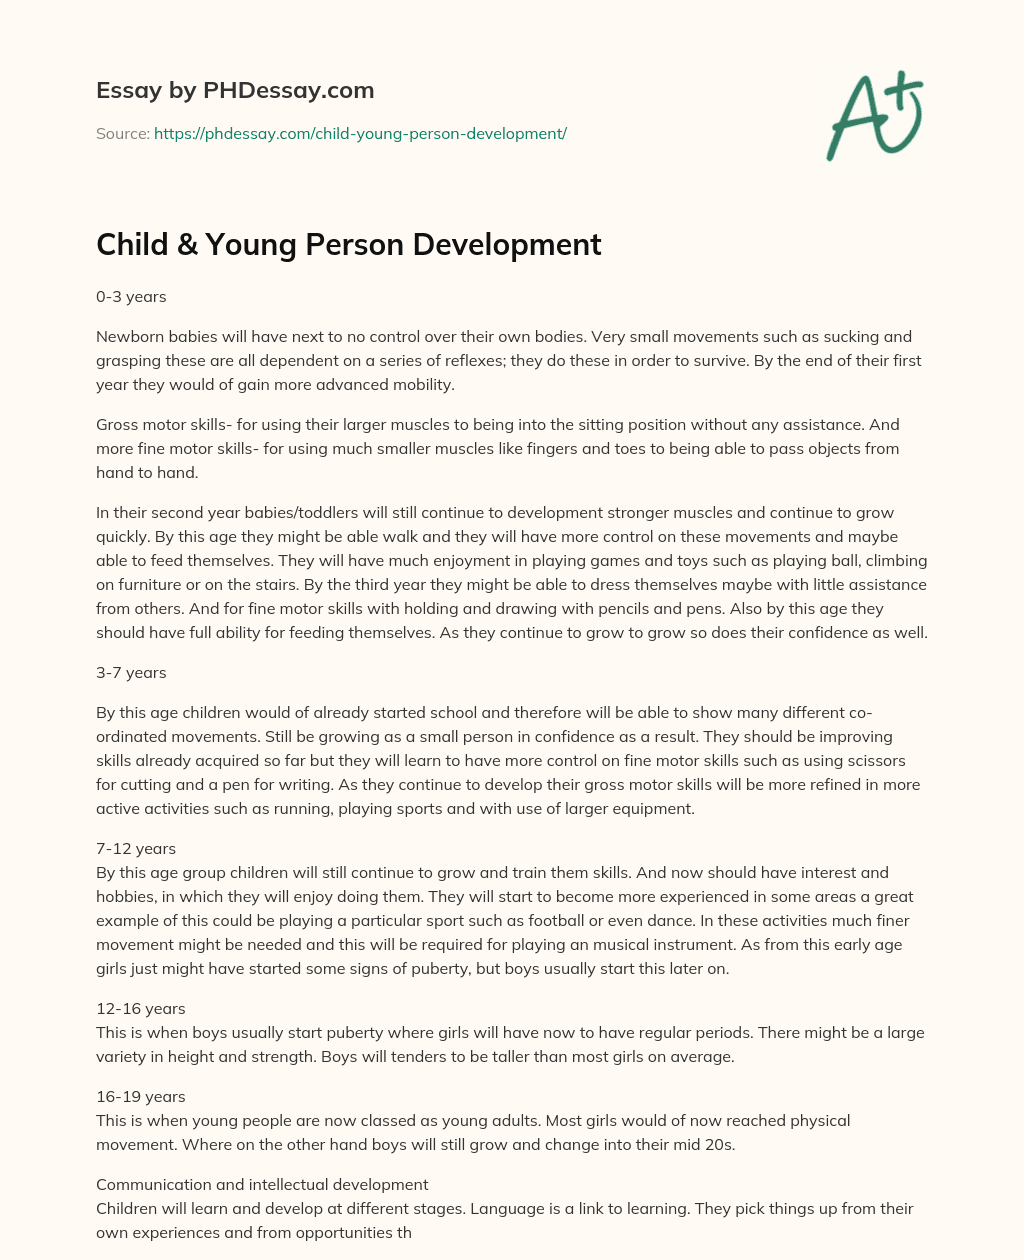 Child & Young Person Development essay